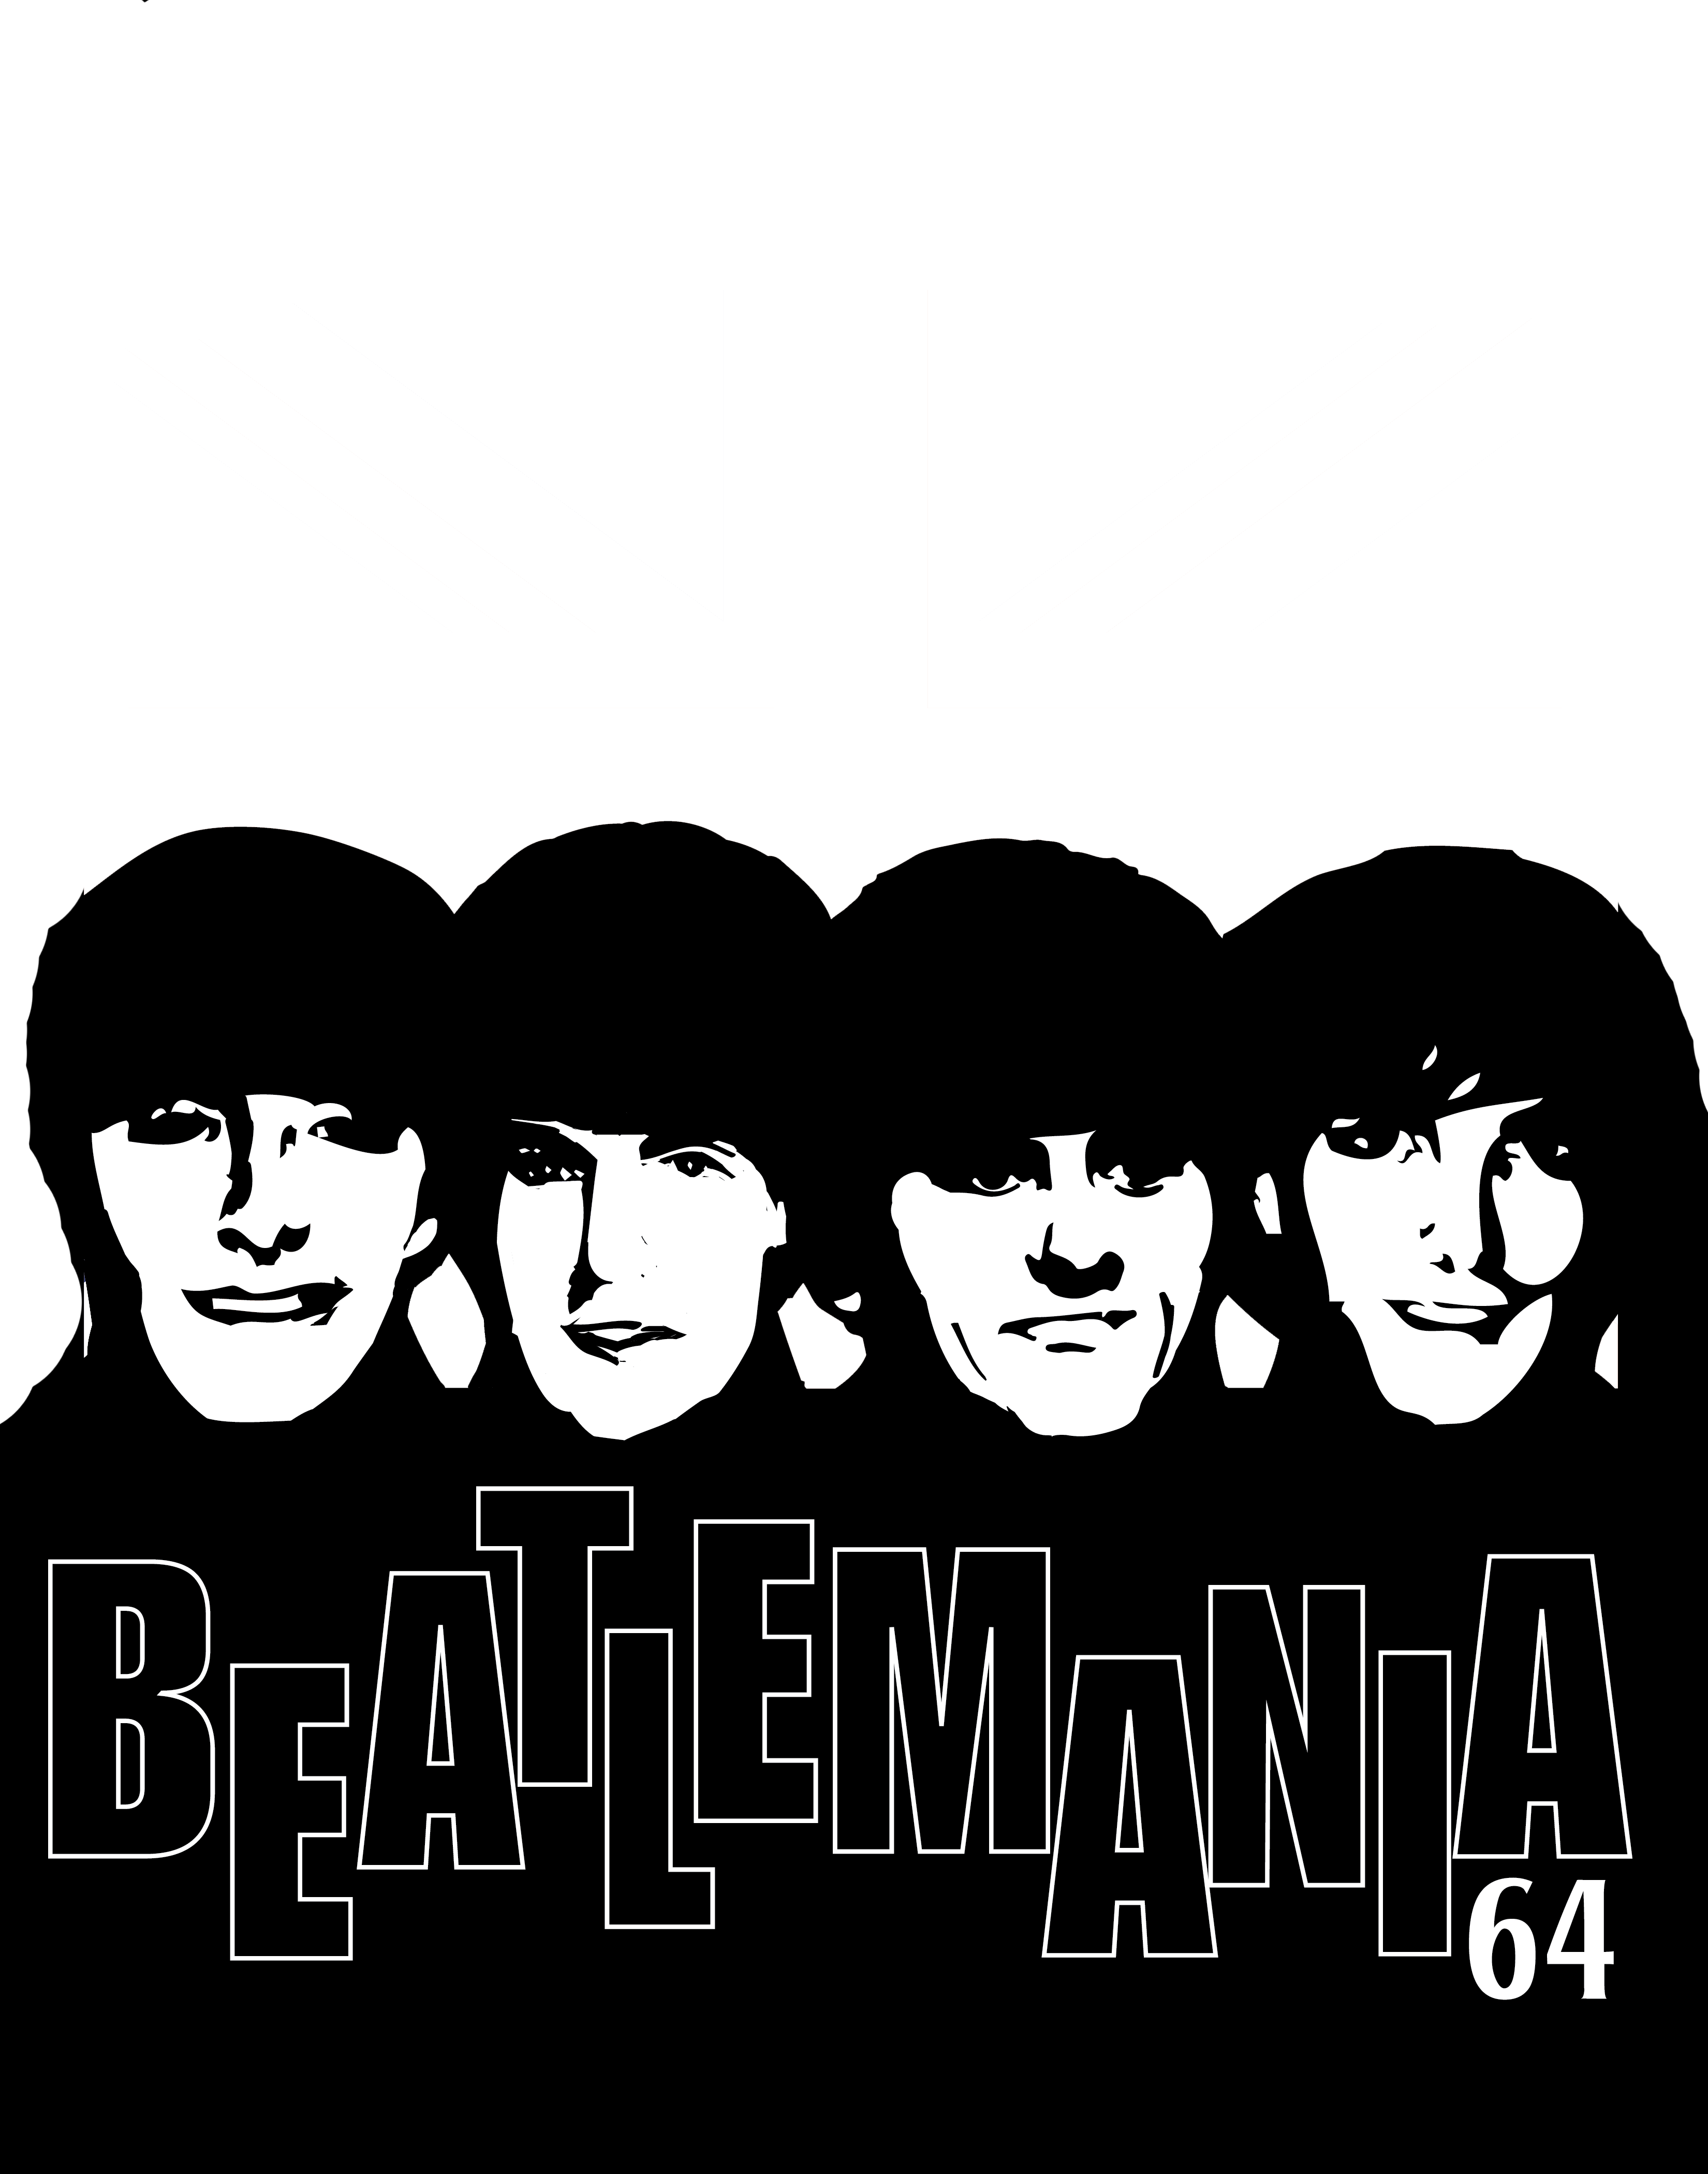 Beatlemania64